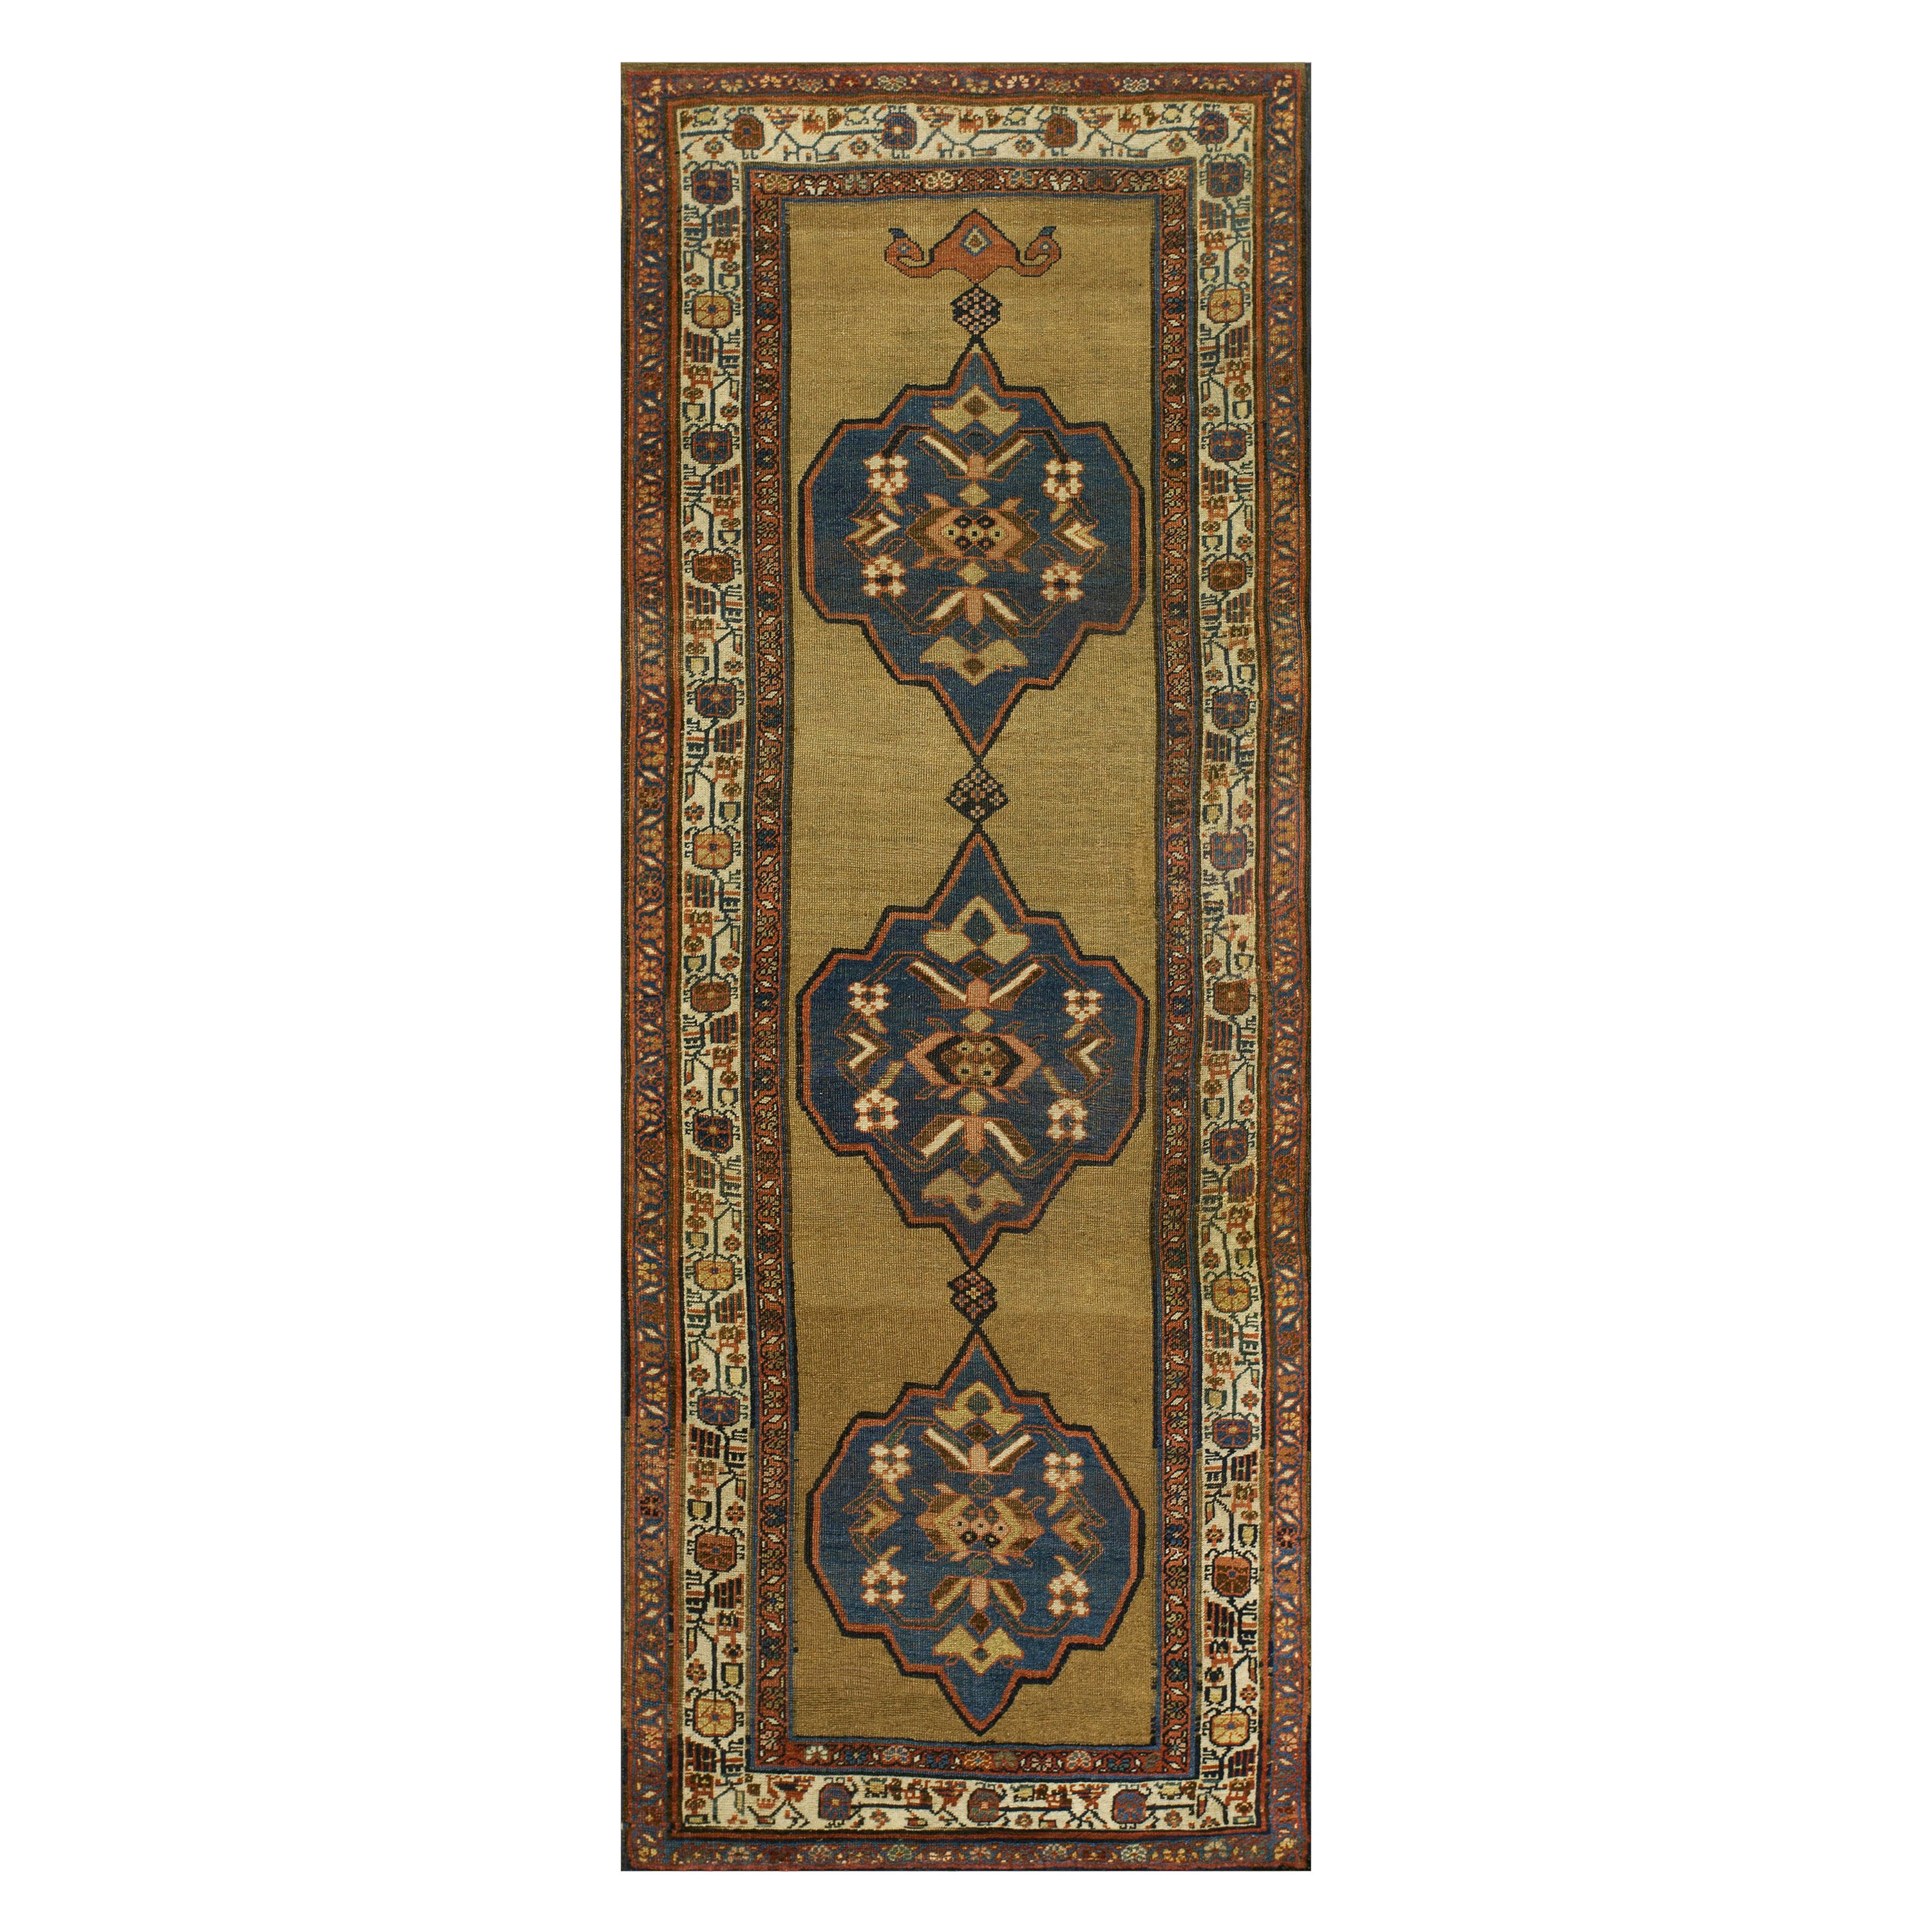 Late 19th Century Persian Bijar Carpet ( 4' x 10' 4" - 122 x 315 cm )